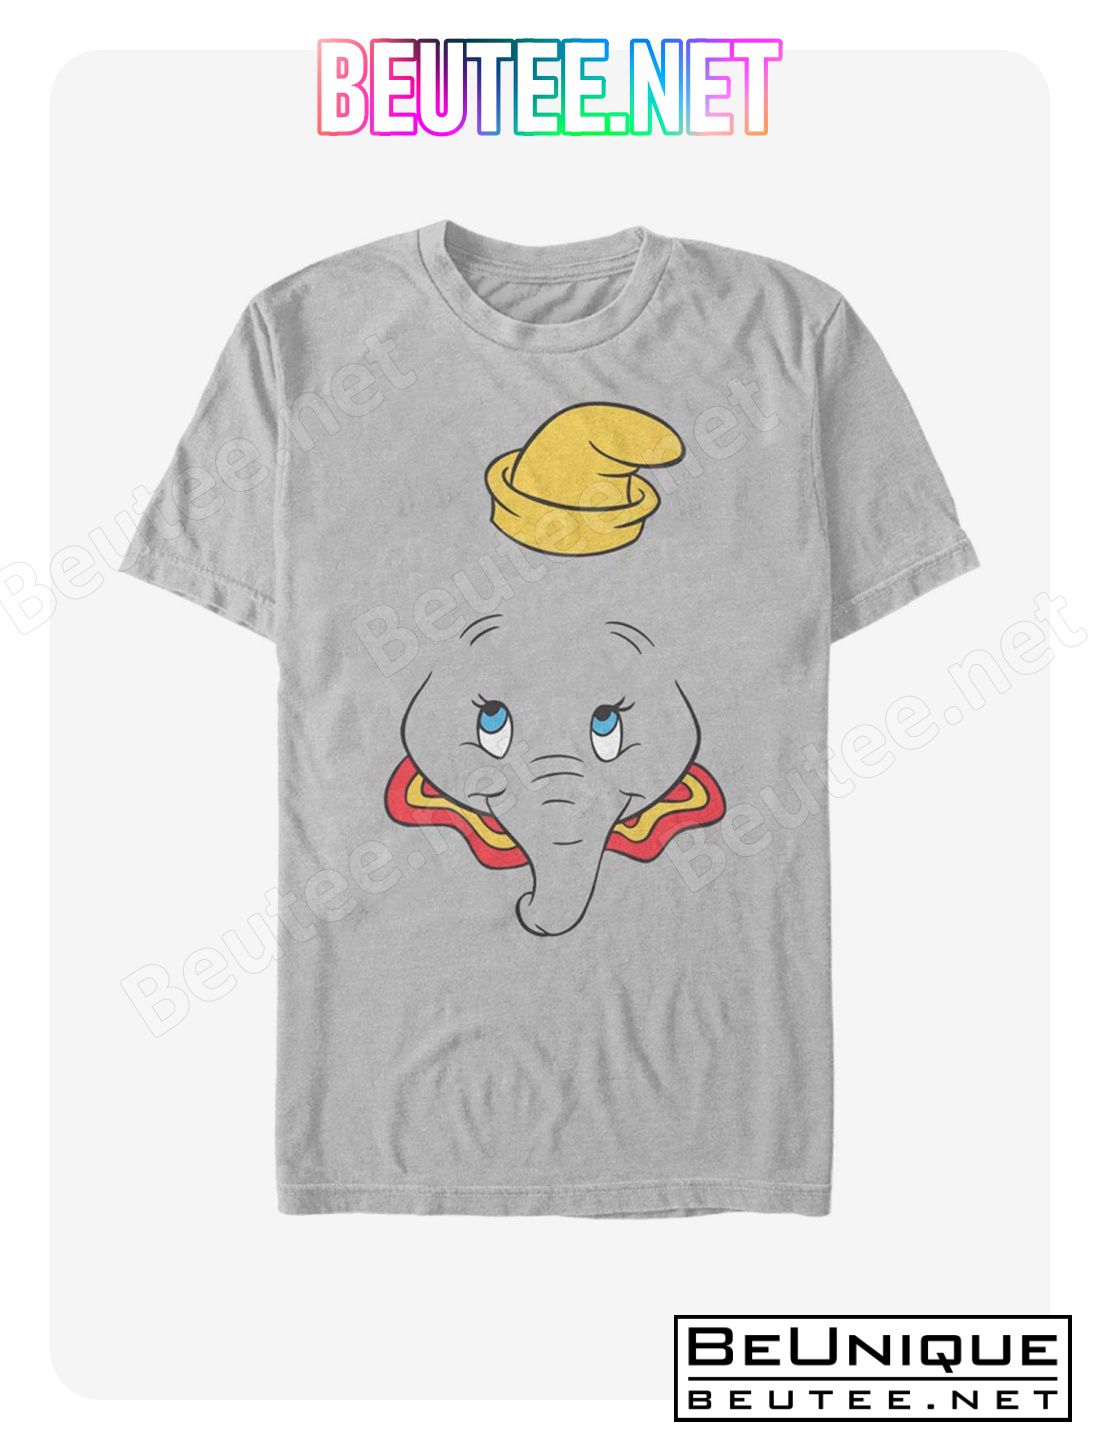 Disney Dumbo Big Face T-Shirt